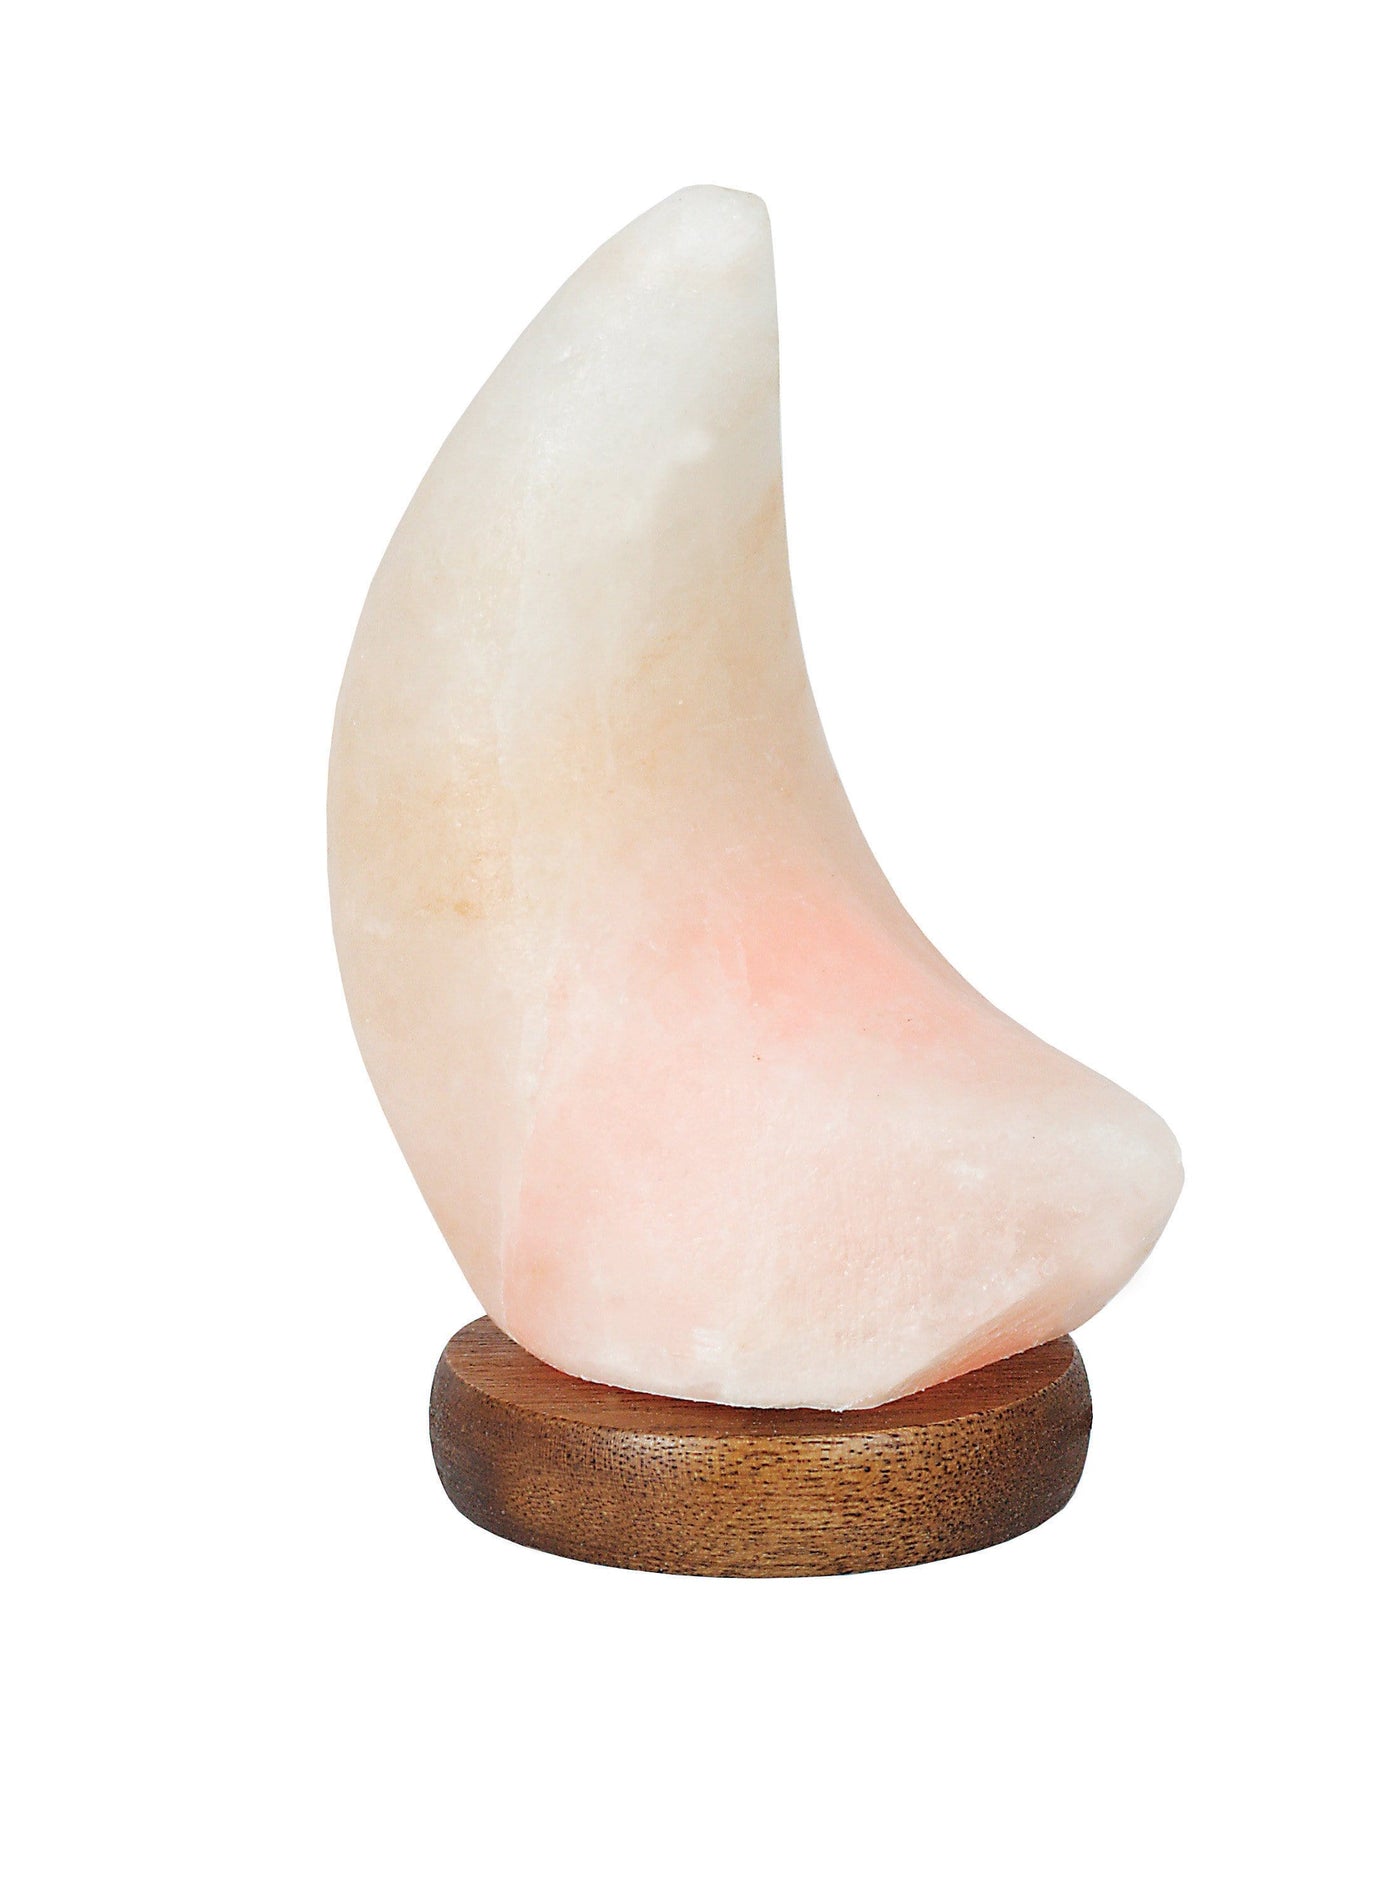 Moon Himalayan Salt Lamp in peach color